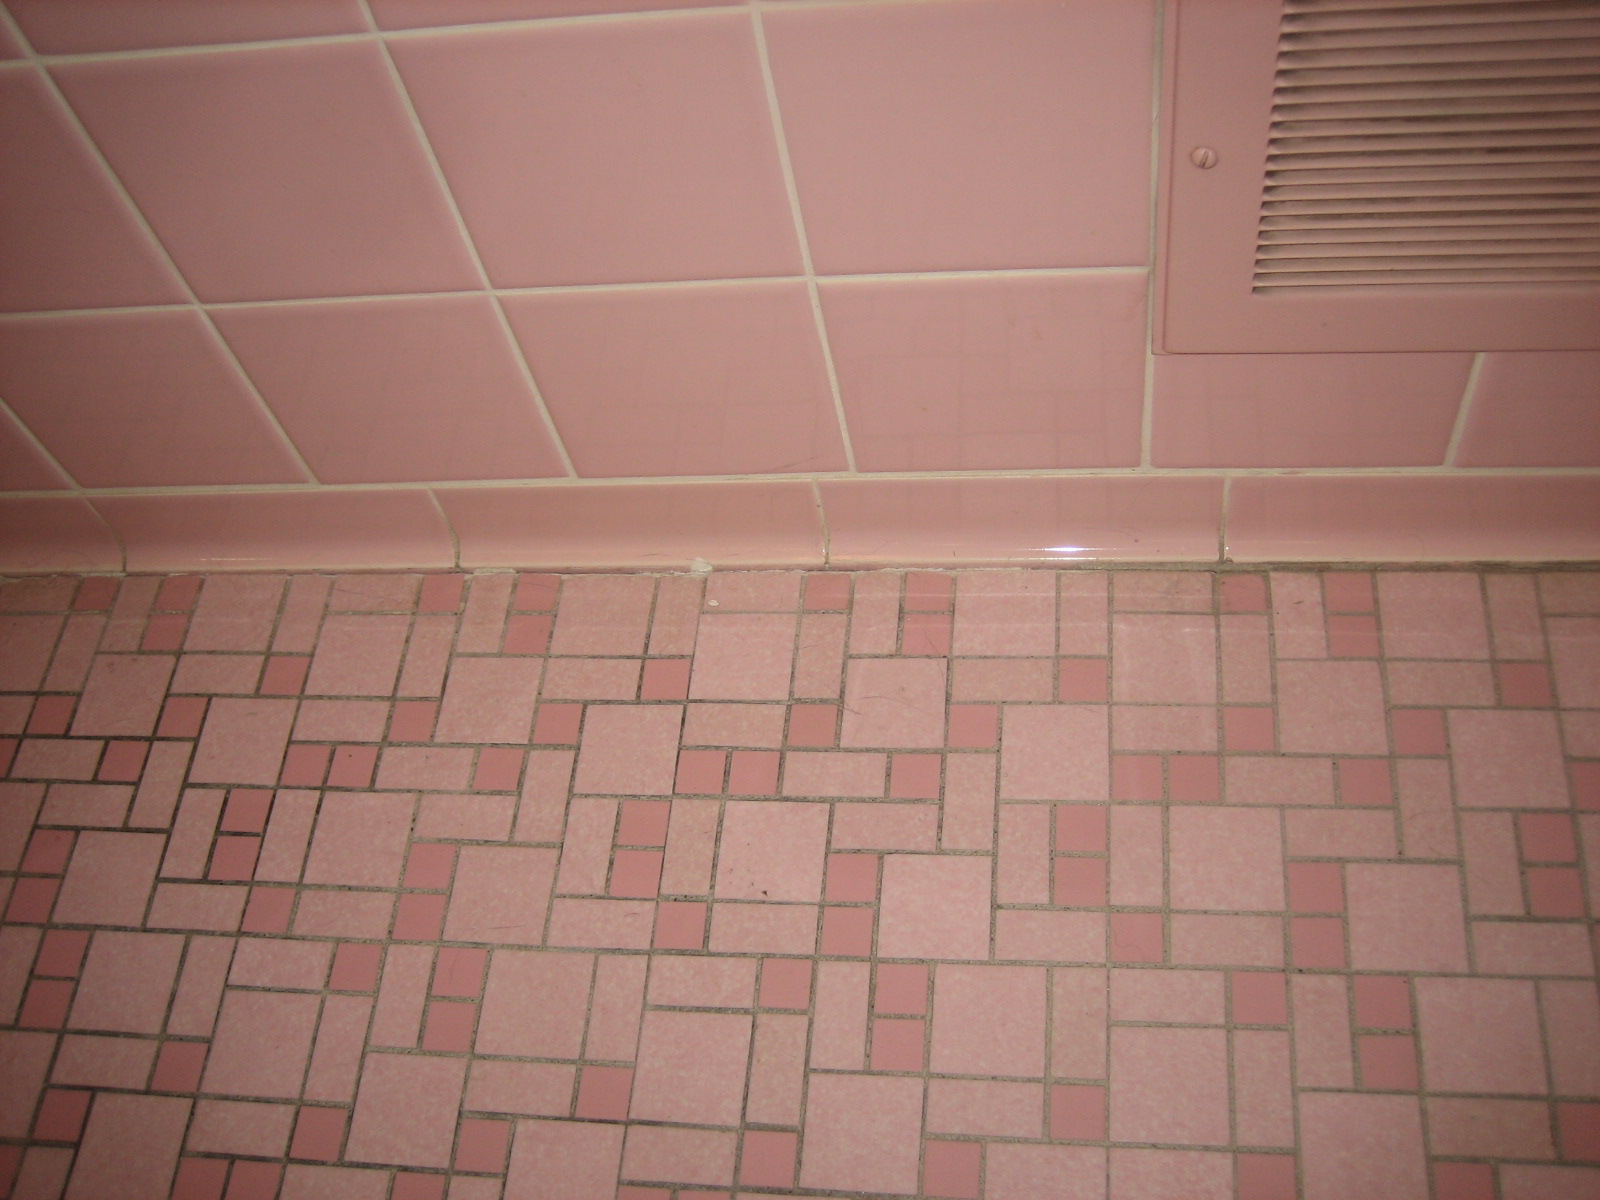 Painting Your Bathroom Tiles, Waterproof Paint For Bathroom Floor Tiles